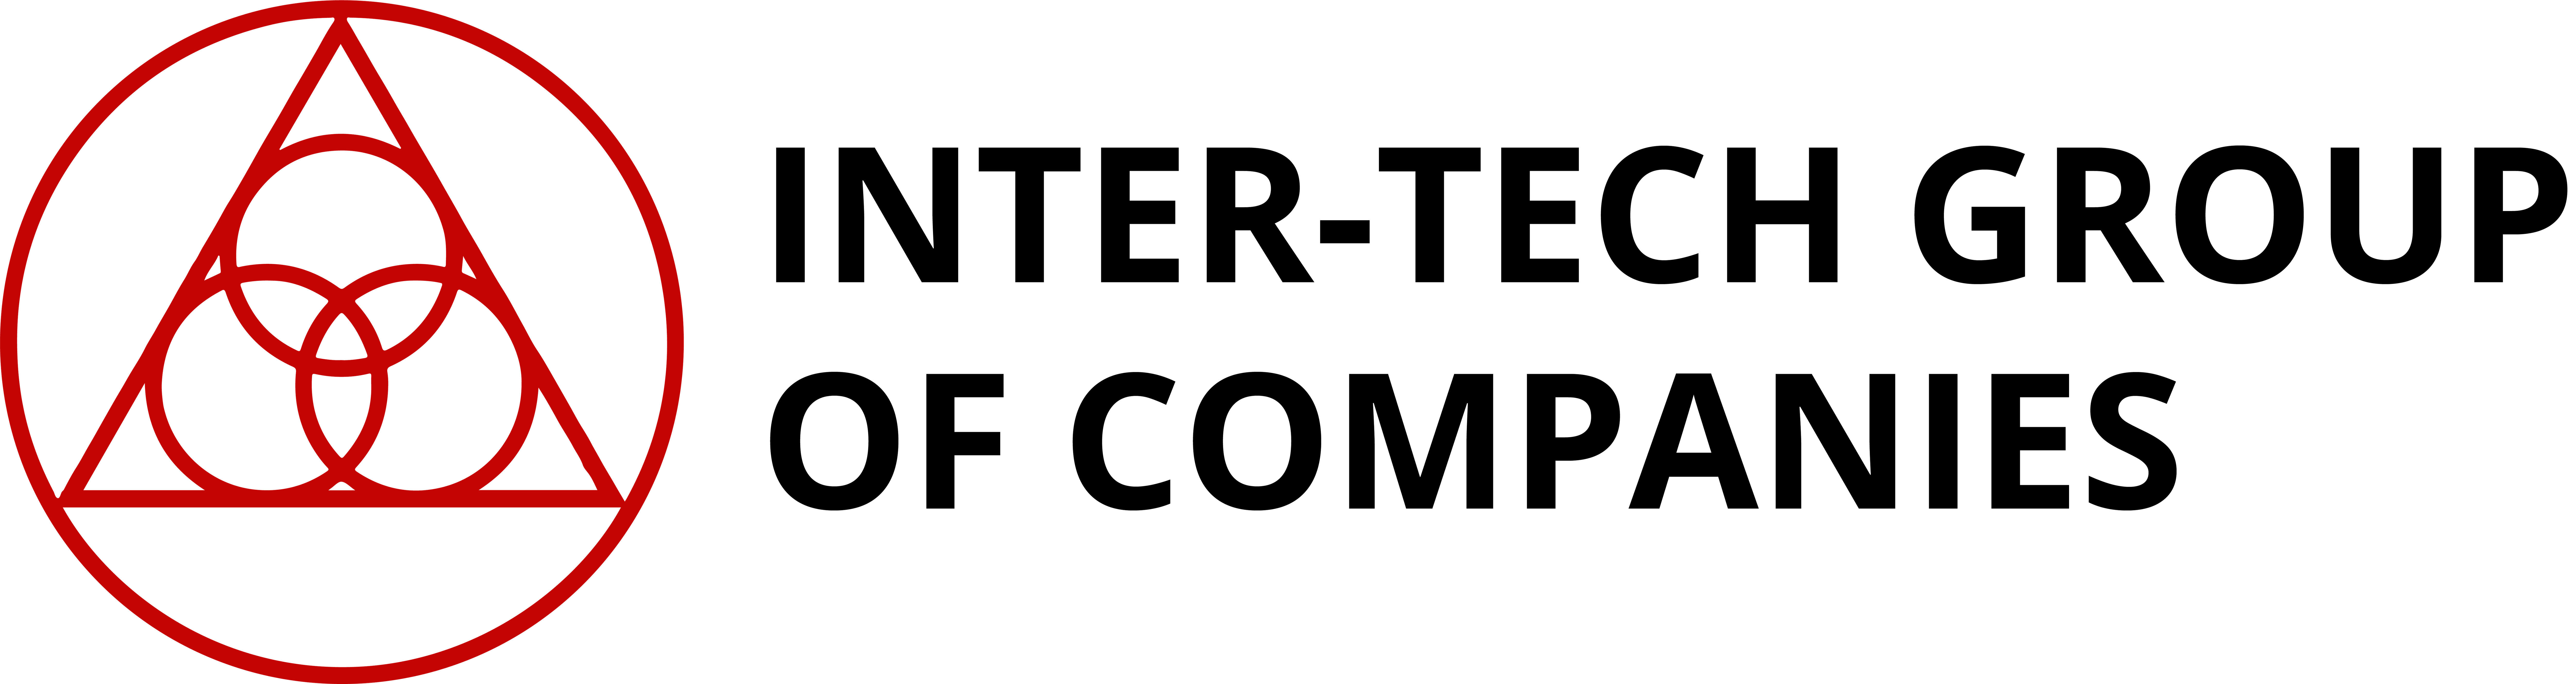 Inter-tech group of companies - 